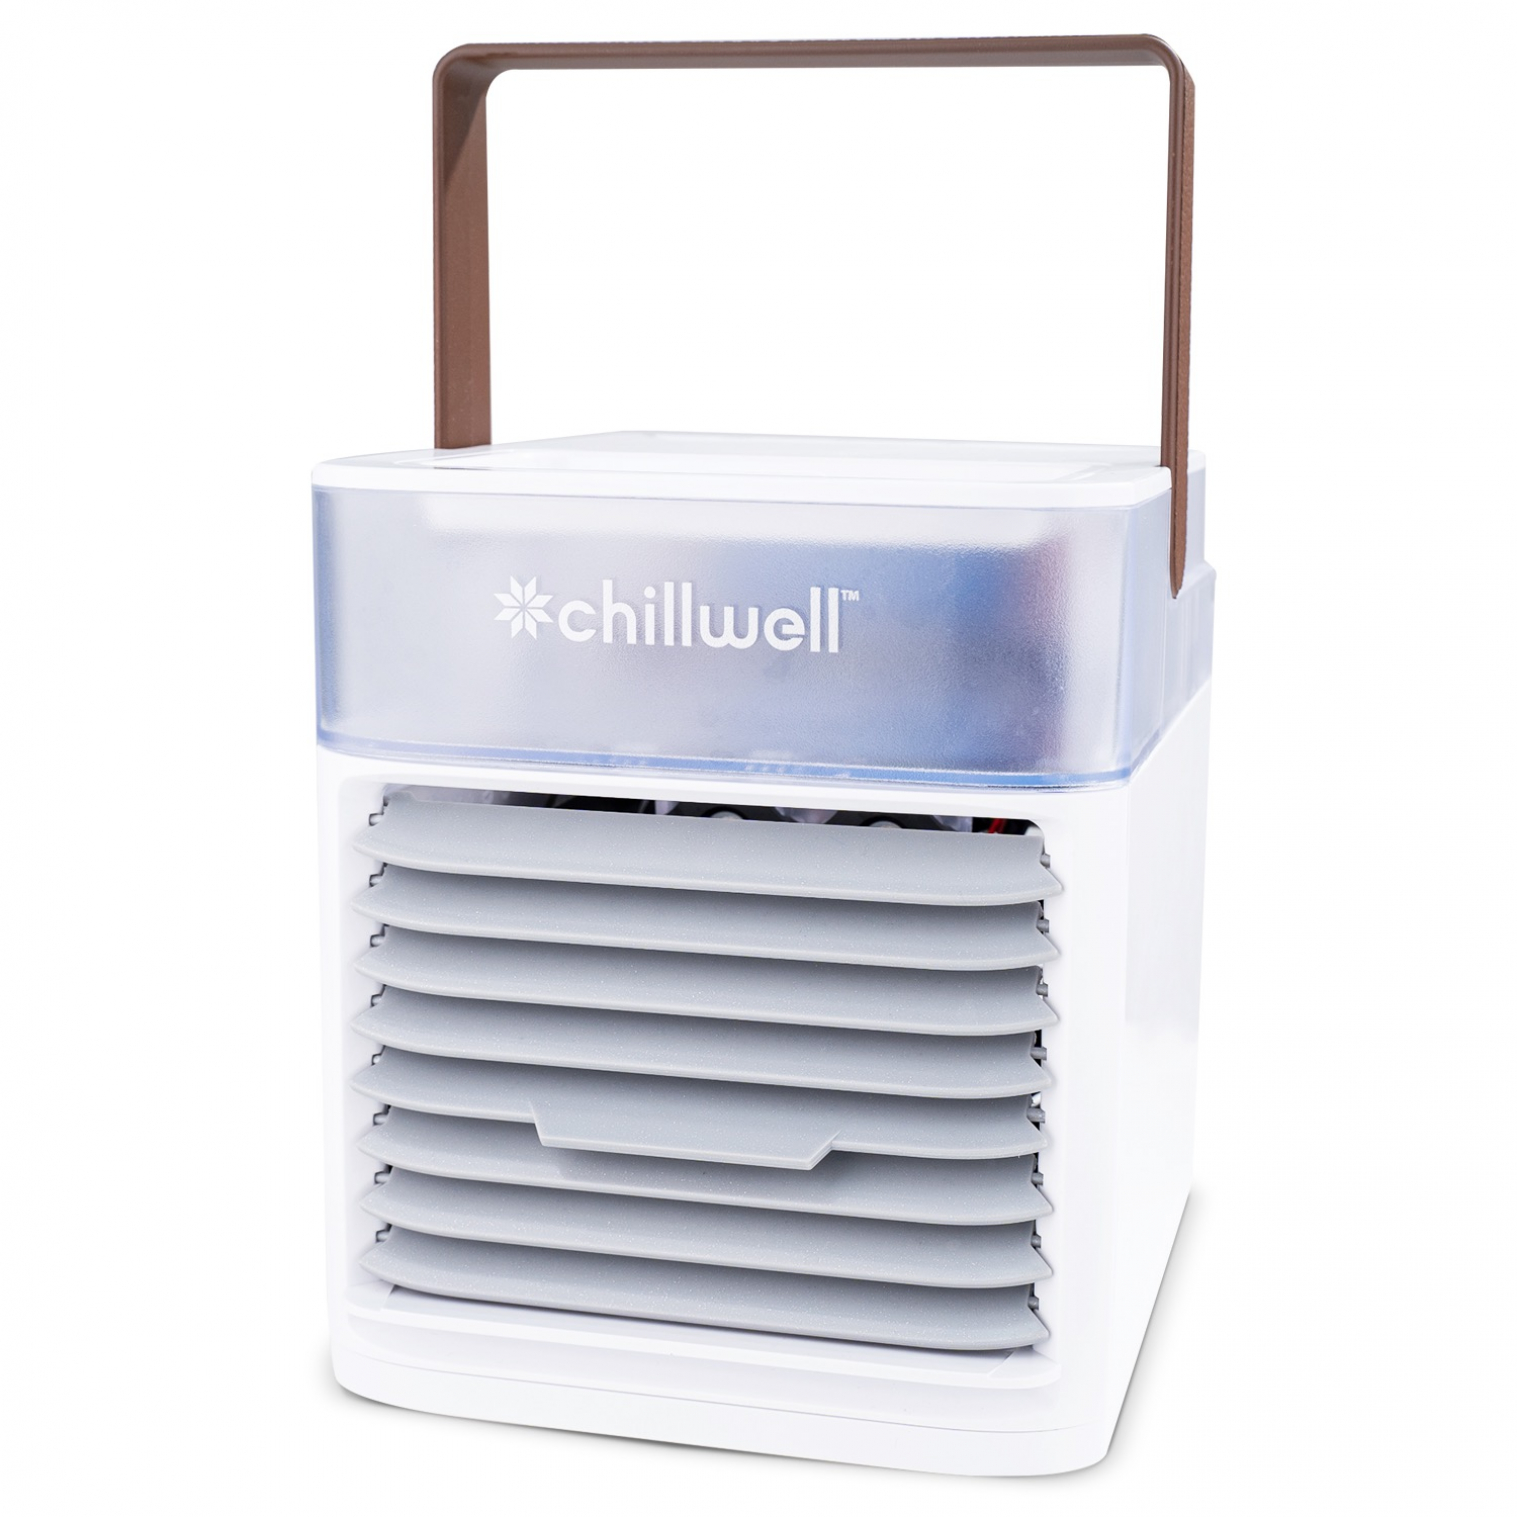 Chillwell AC Desktop Air Conditioner